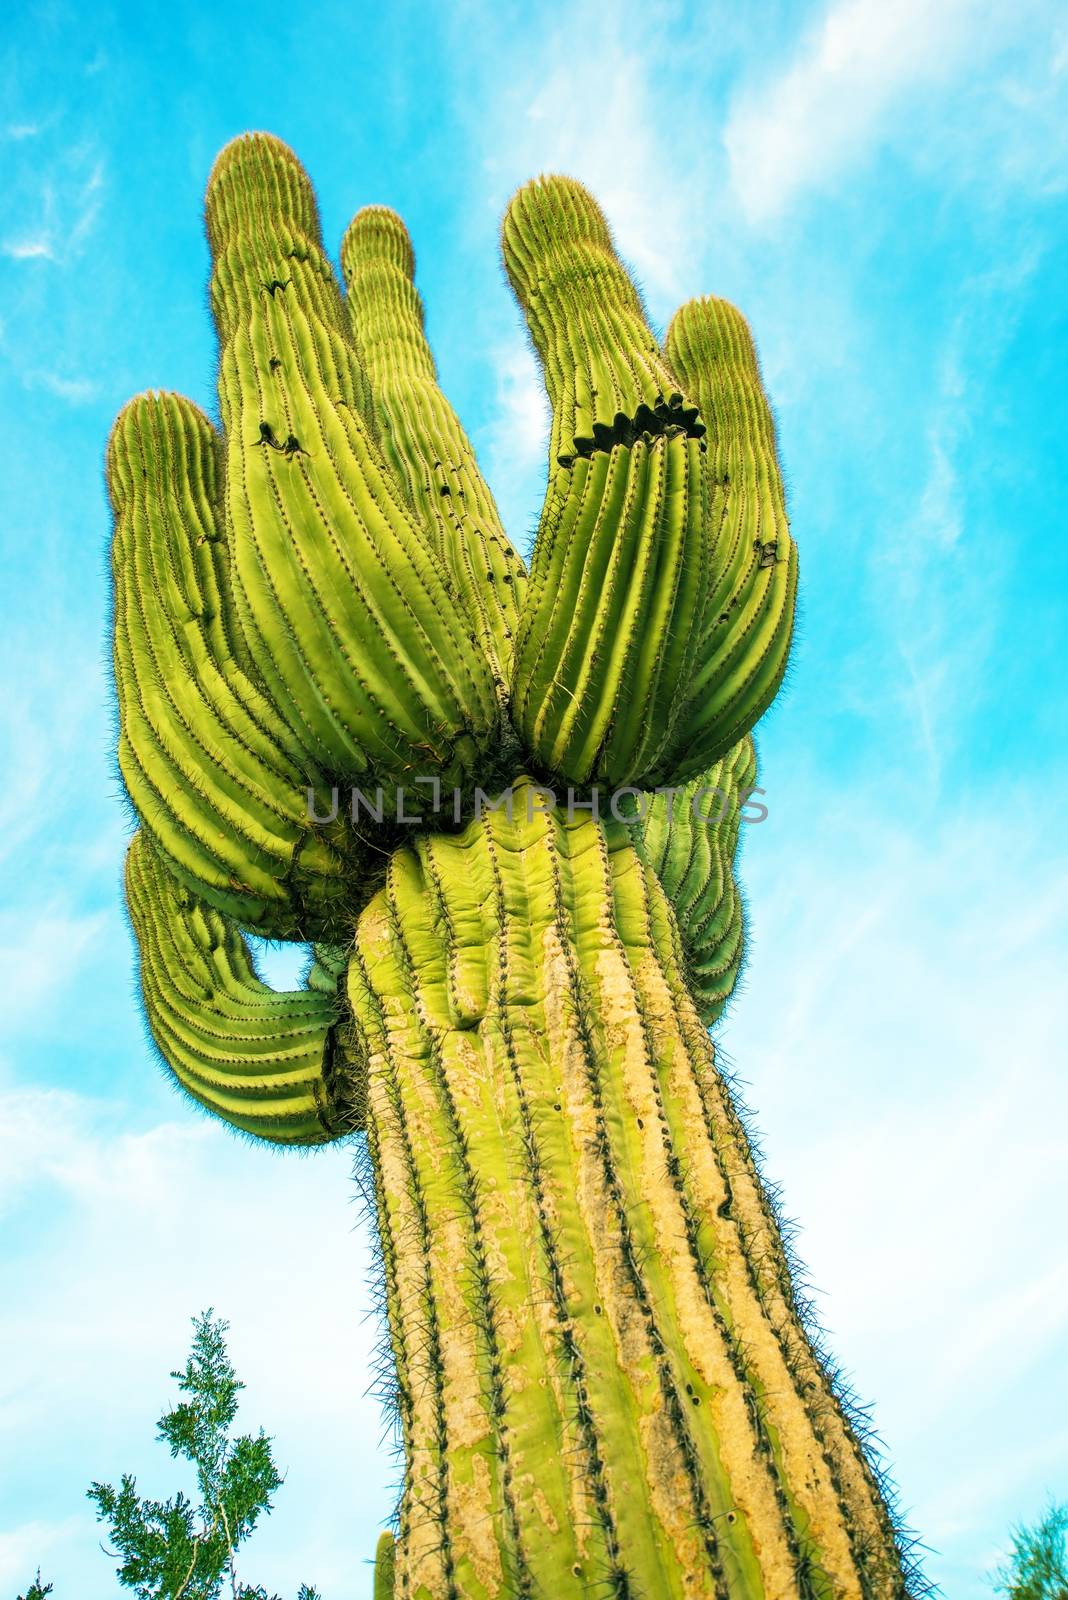 Arizona Organ Pipe Cactus by welcomia